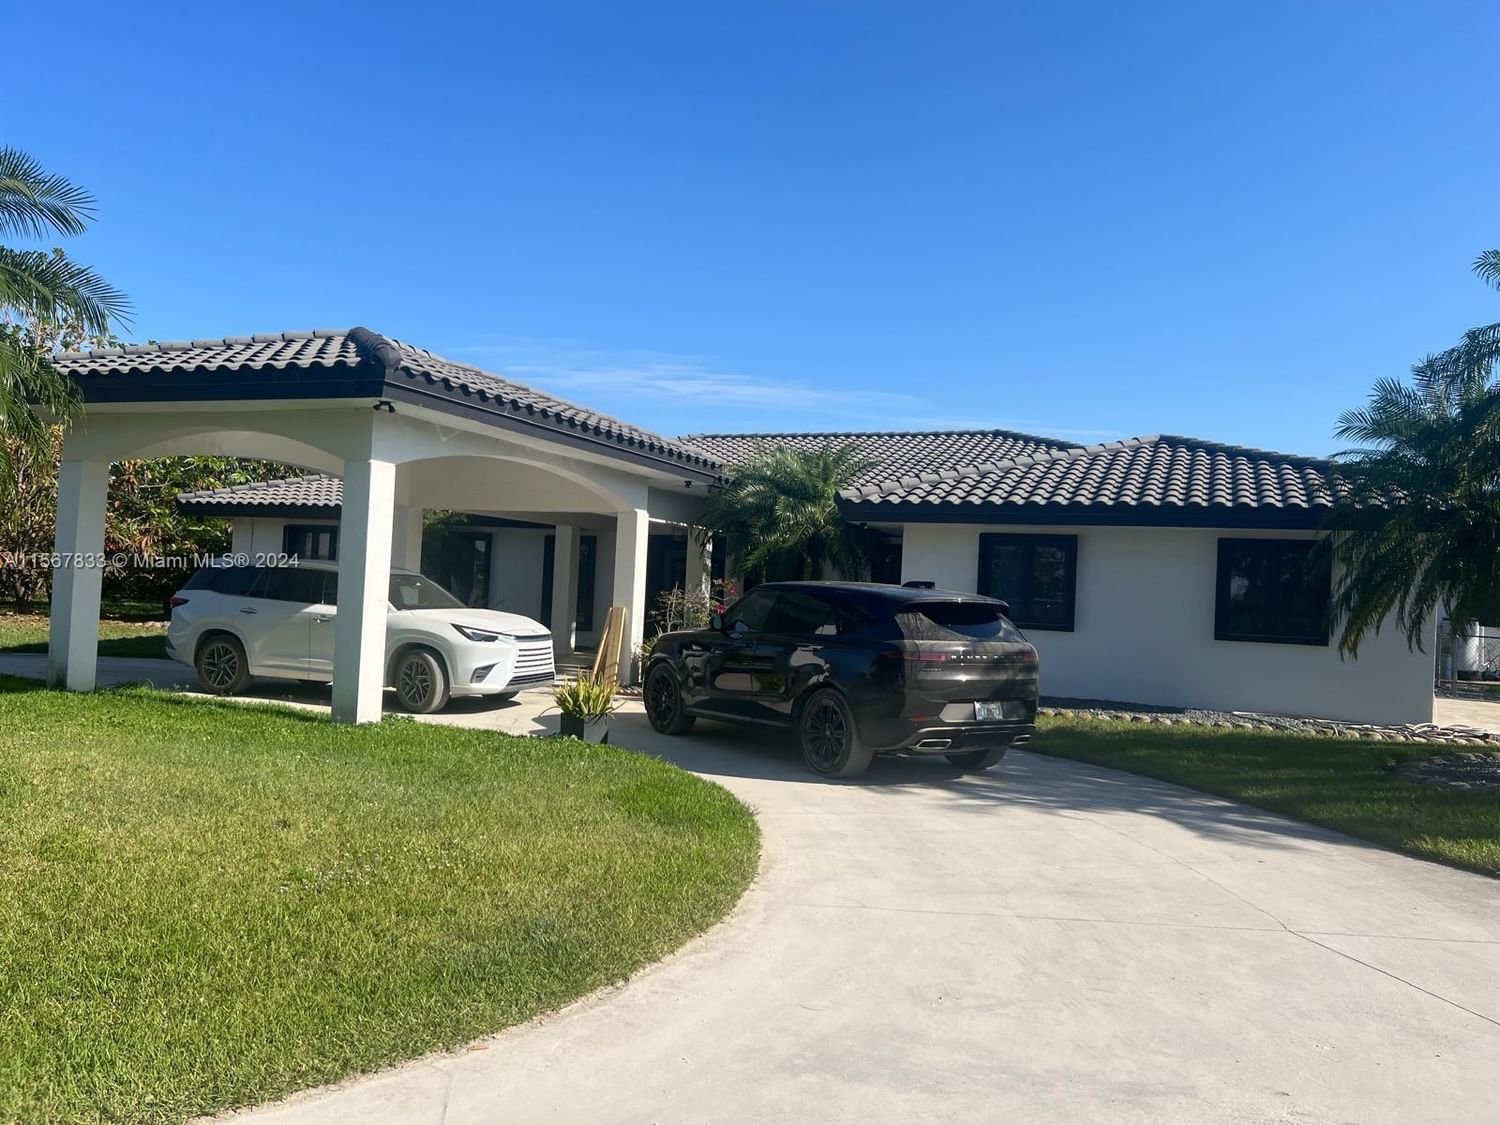 Real estate property located at 16750 160th St, Miami-Dade County, Unkown, Miami, FL